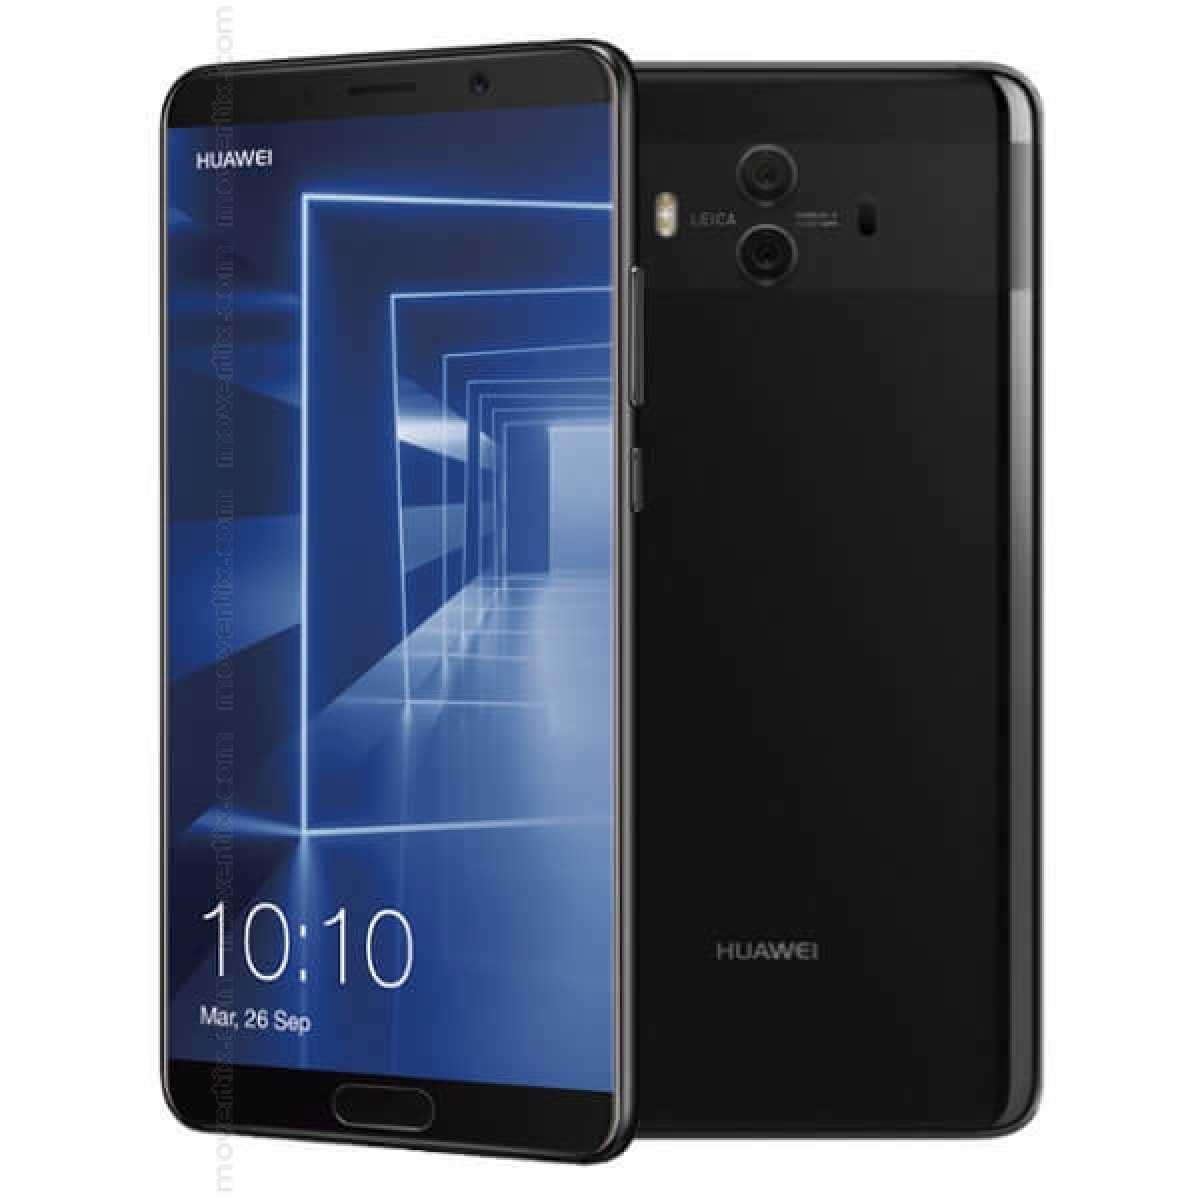 Huawei Mate 10 Dual SIM Black 64GB and 4GB RAM ...